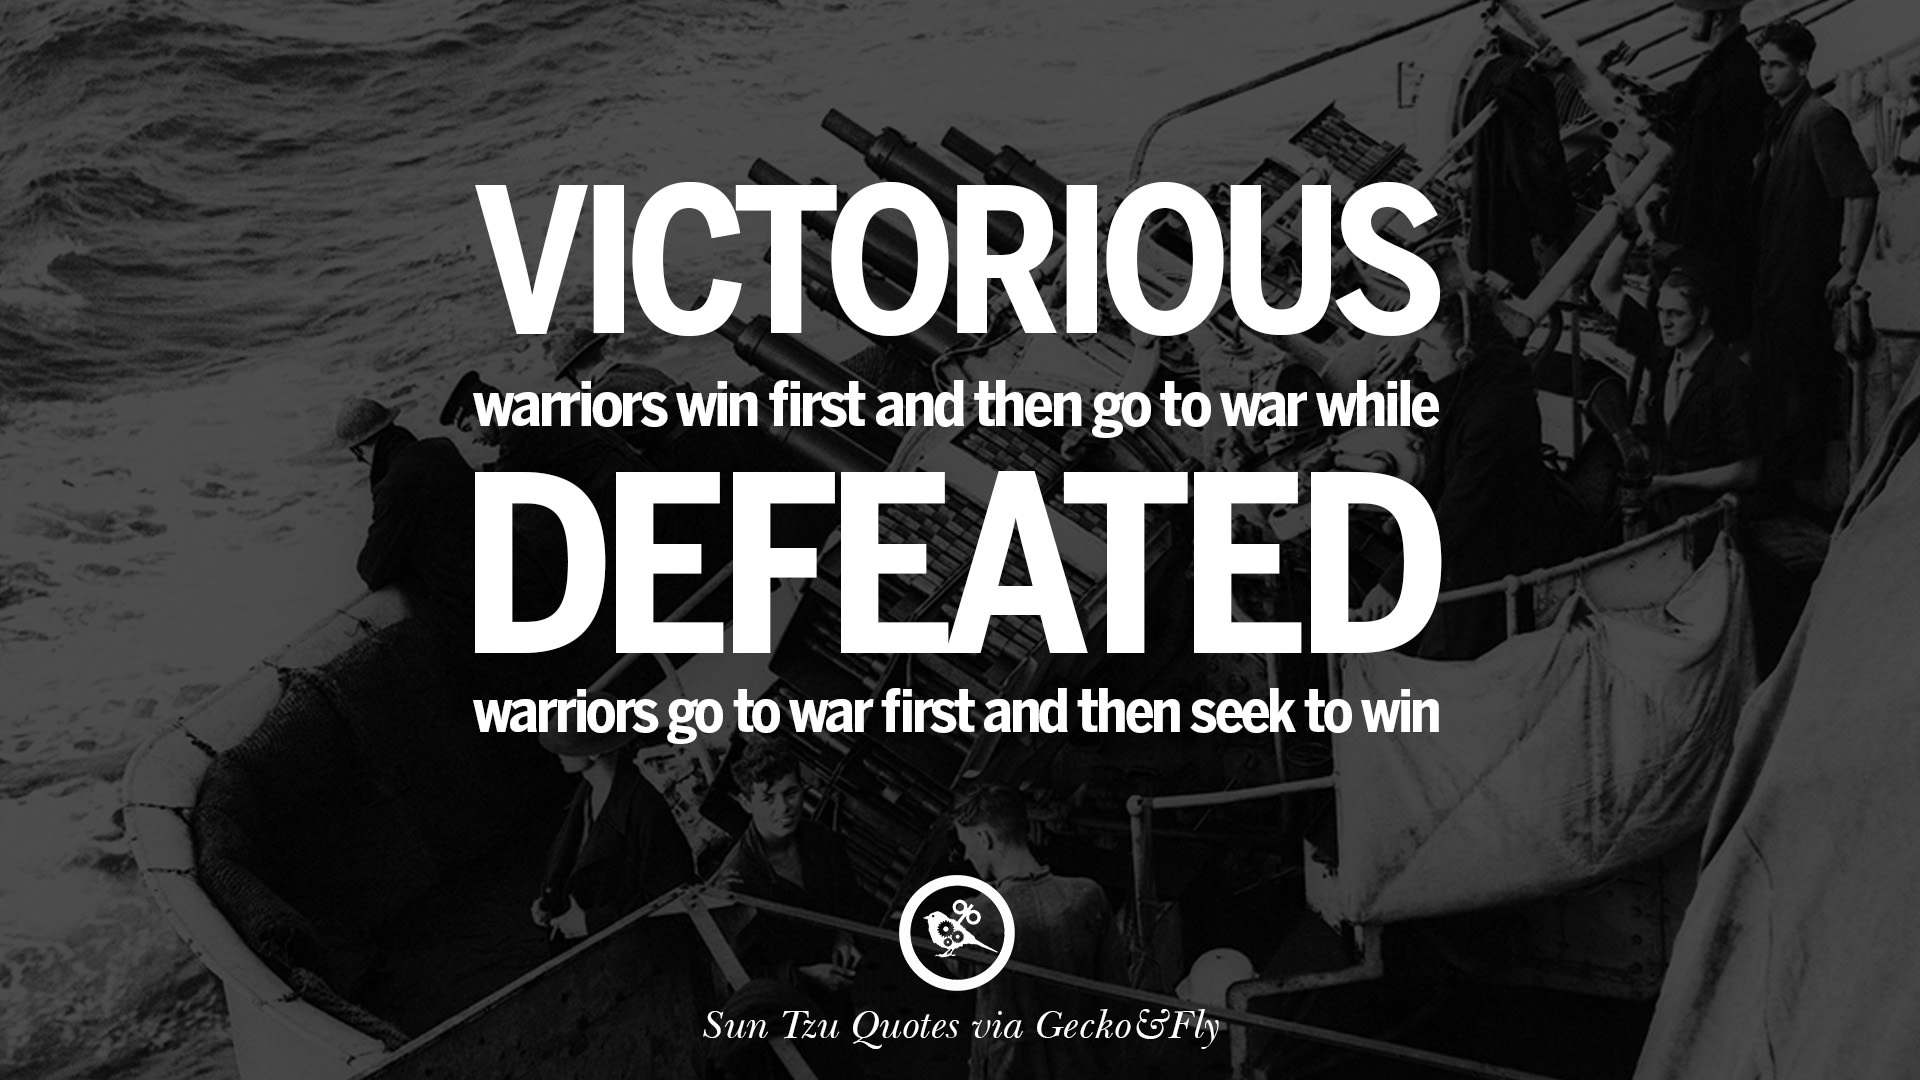 Sun Tzu Quotes Art Of War Posters3 